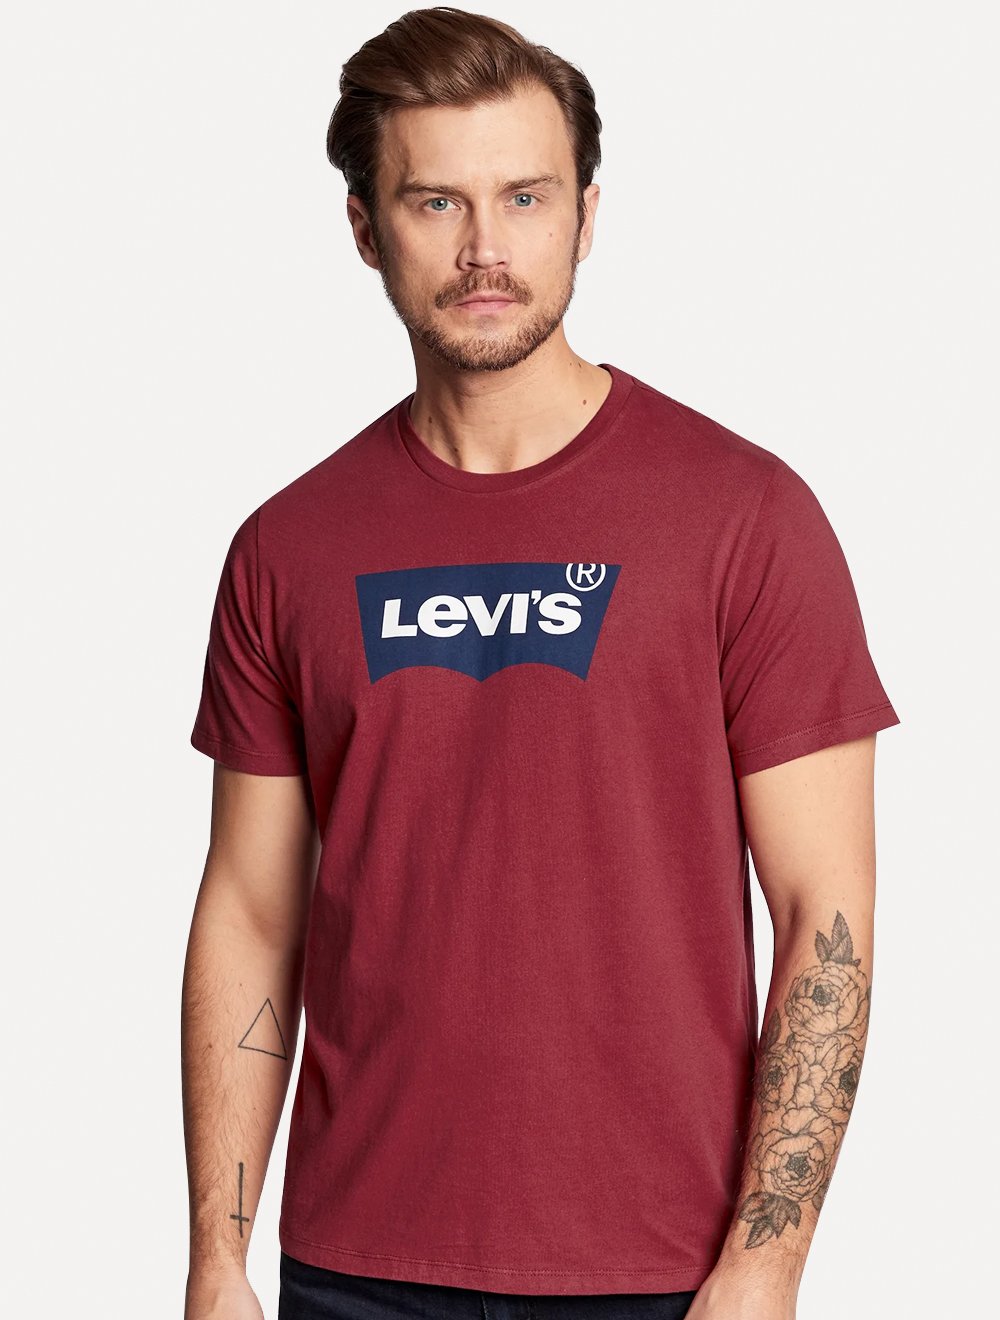 Camiseta Levis Masculina Short Sleeve Navy Graphic Bordô